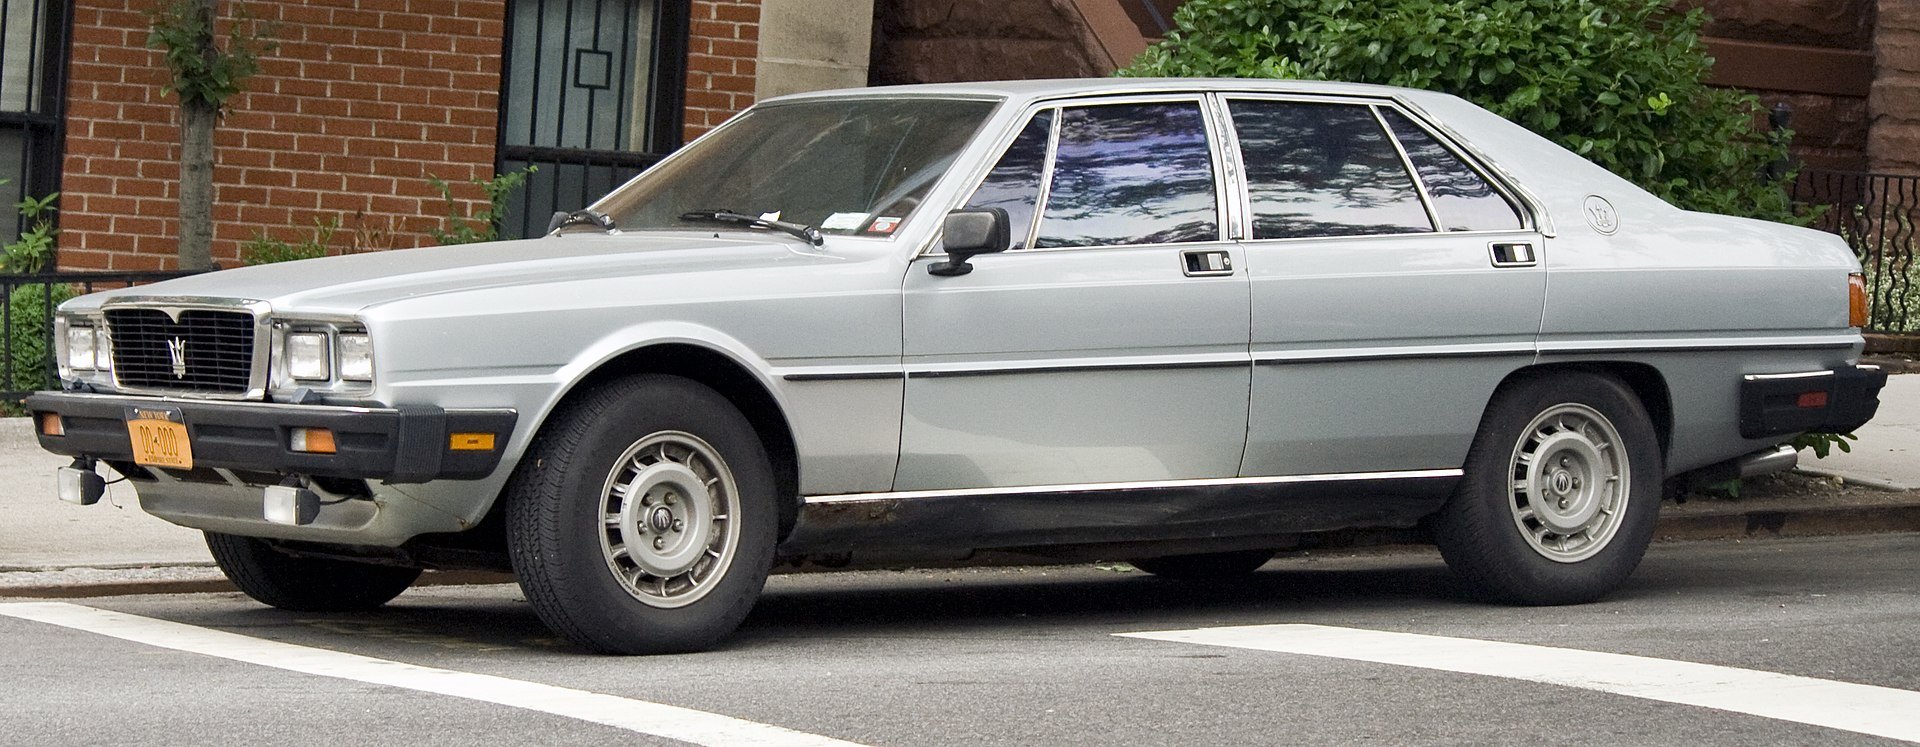 1920px-1986_Maserati_QPIII_UWS.jpg